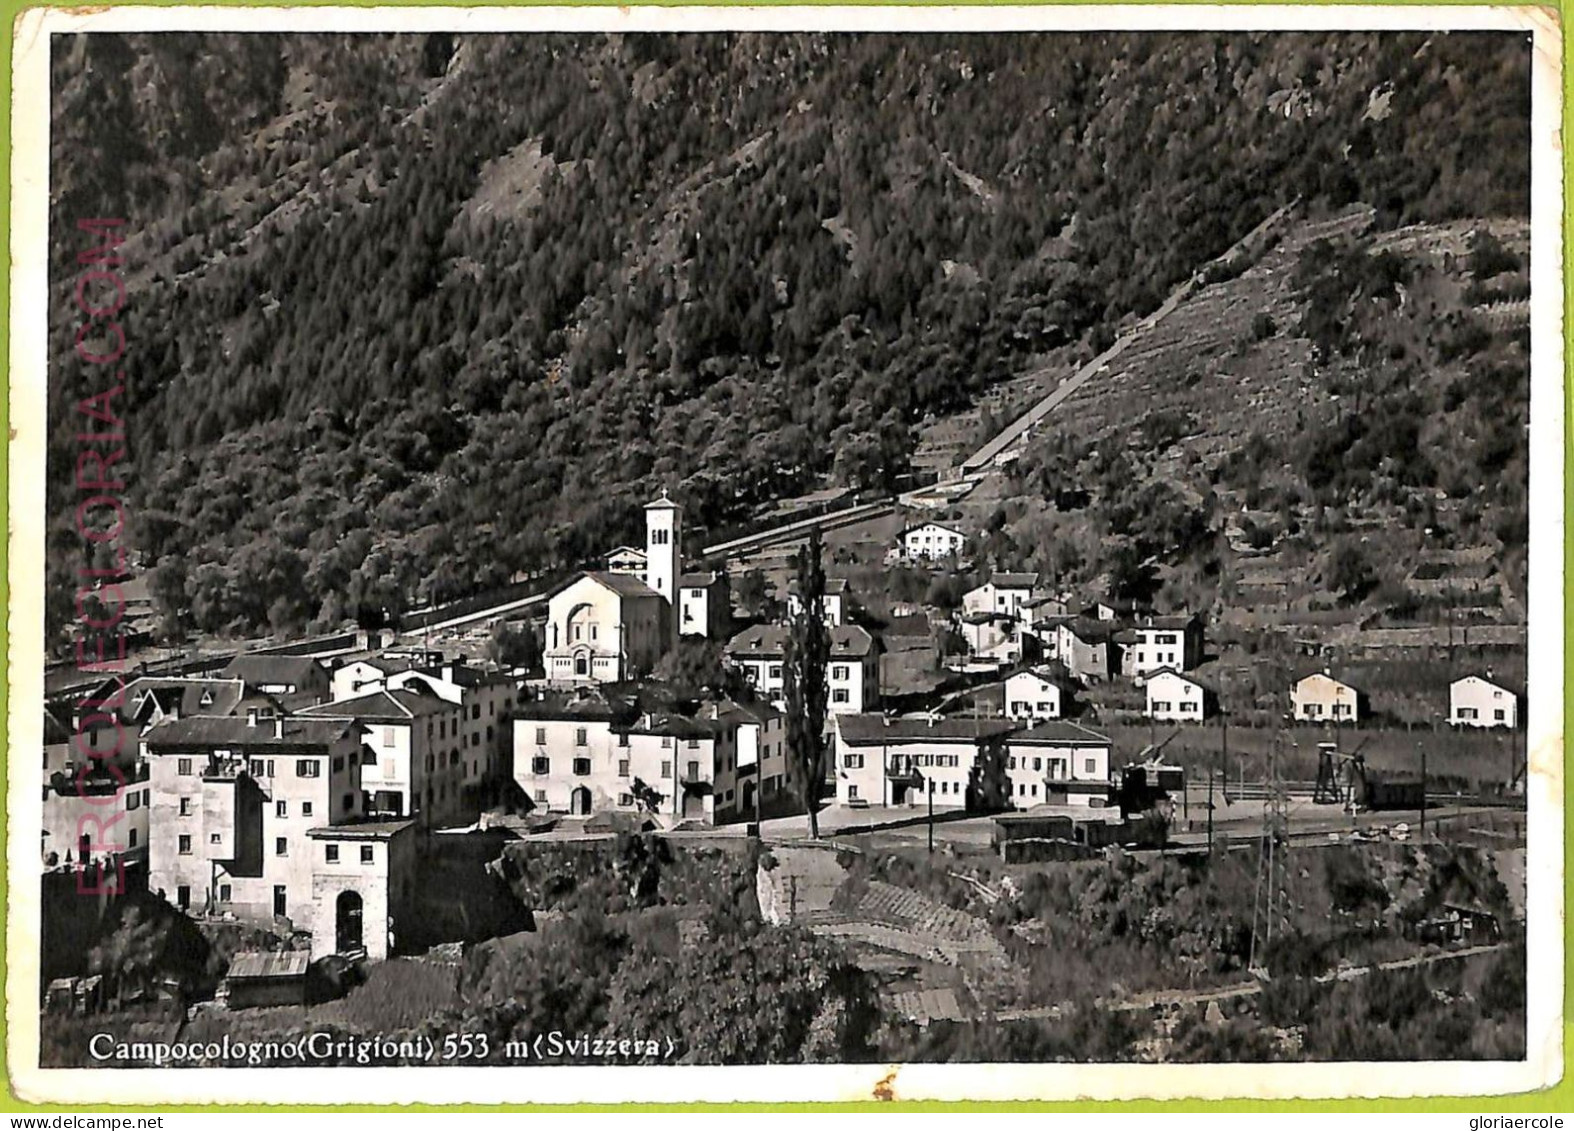 Ad5637 - SWITZERLAND - Ansichtskarten VINTAGE POSTCARD - Campocologno - 1956 - Campo